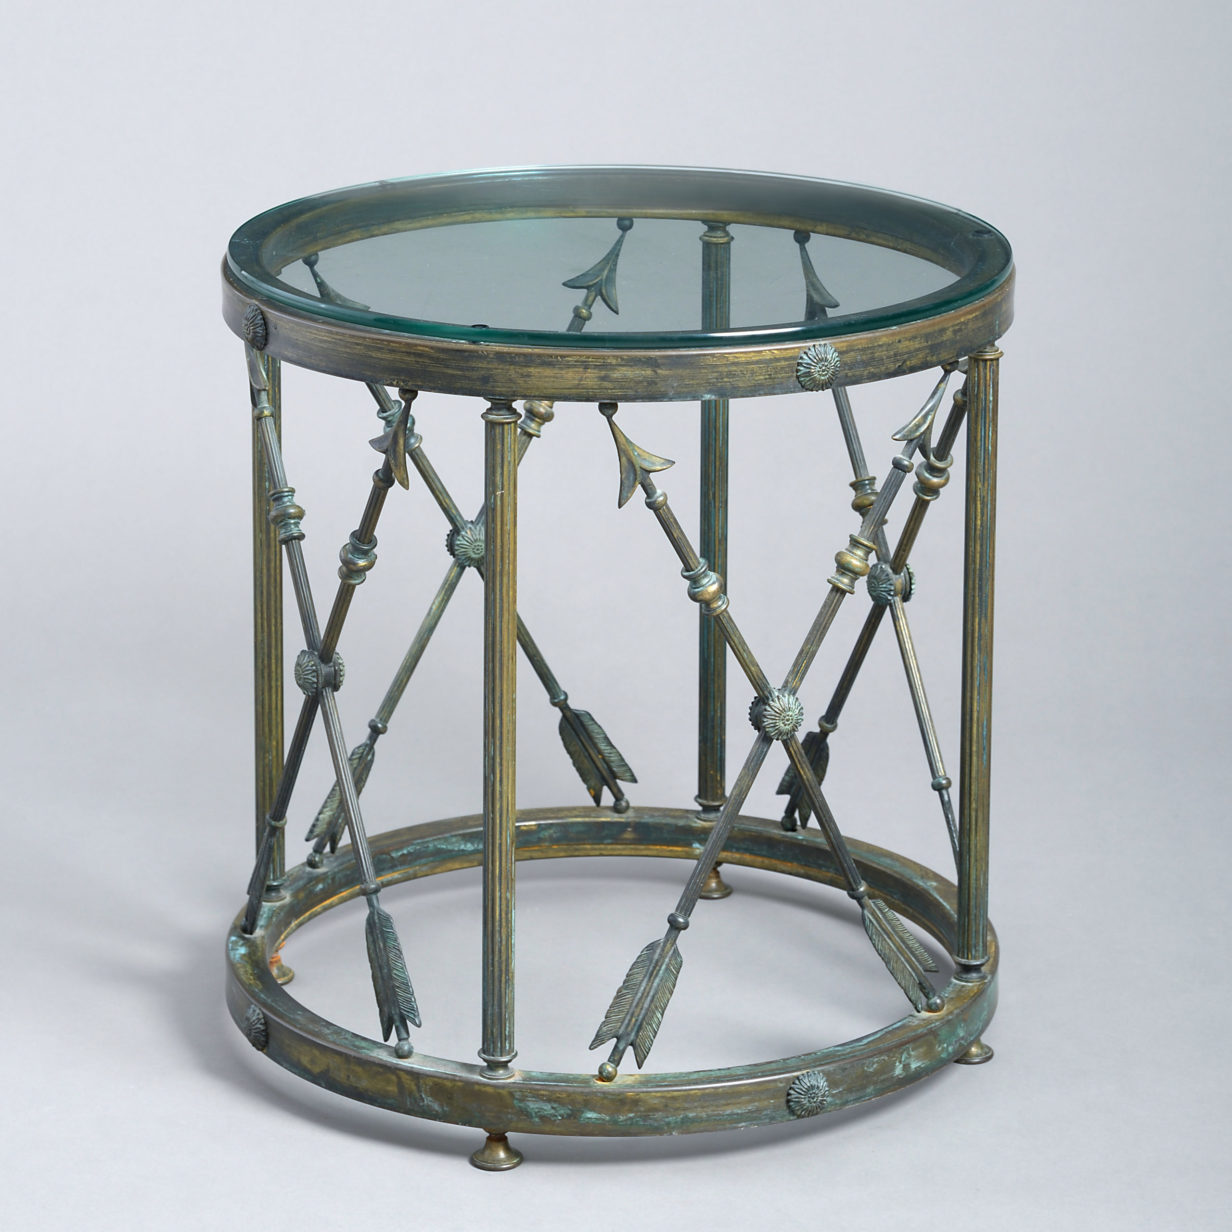 Bronze drum table